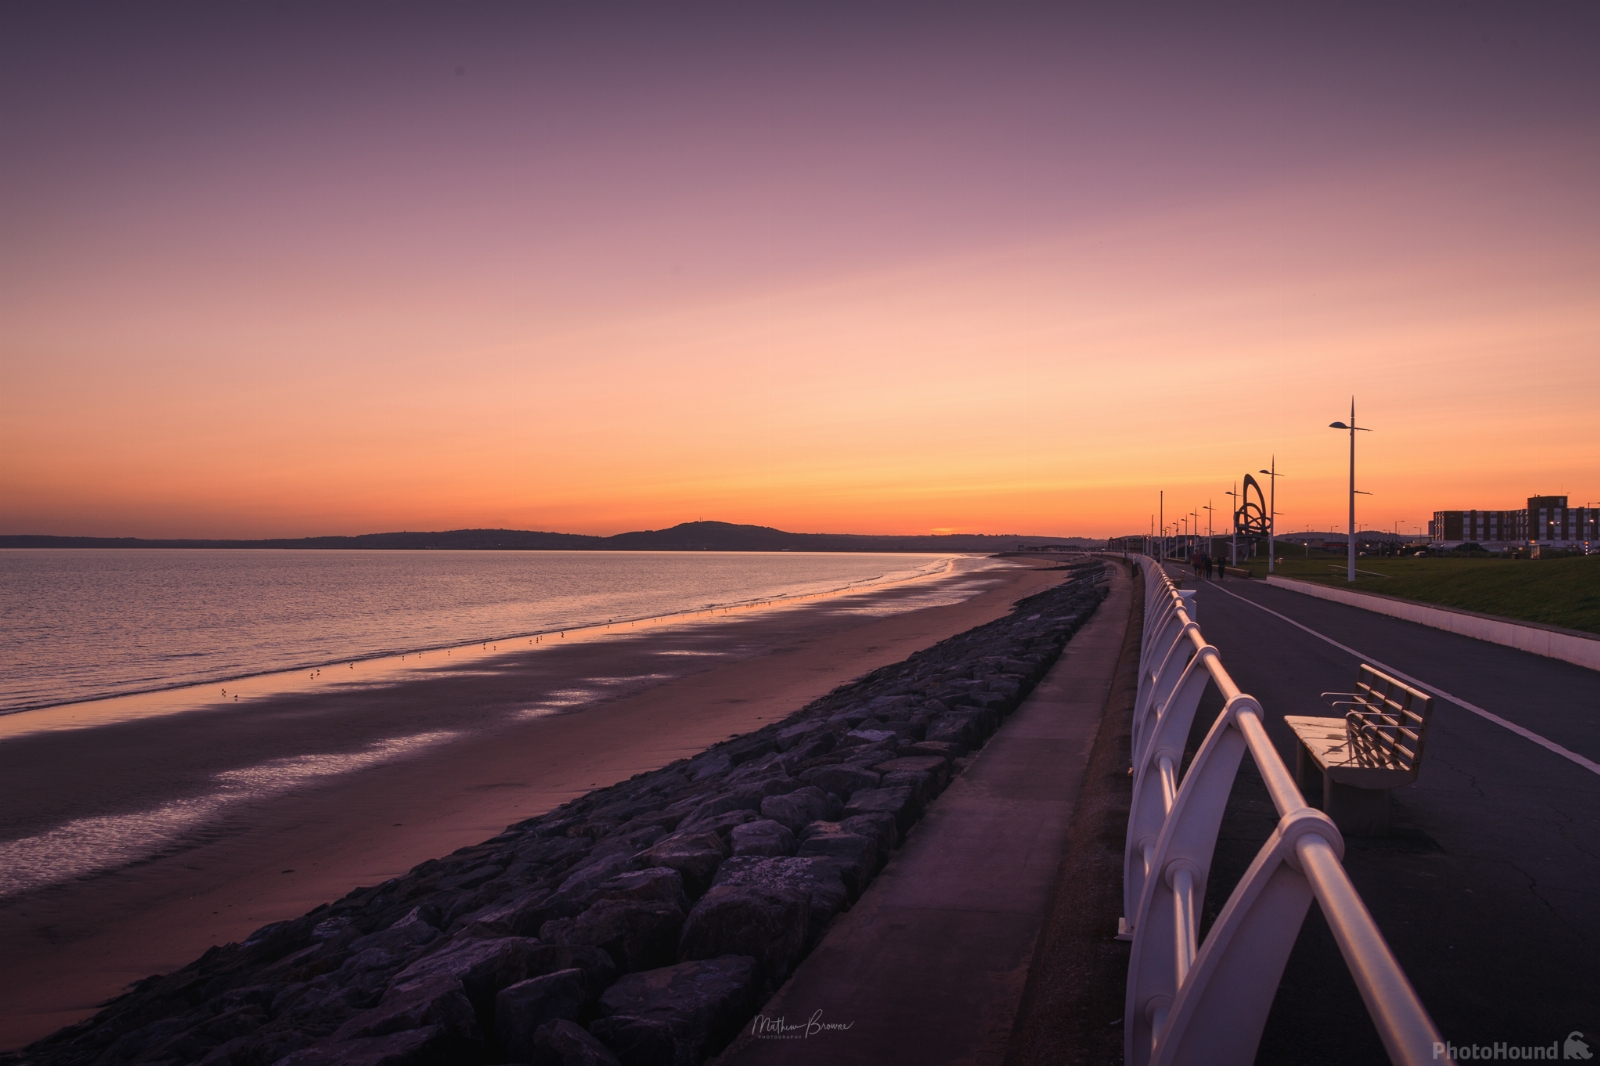 Image of Aberavon Pier by Mathew Browne